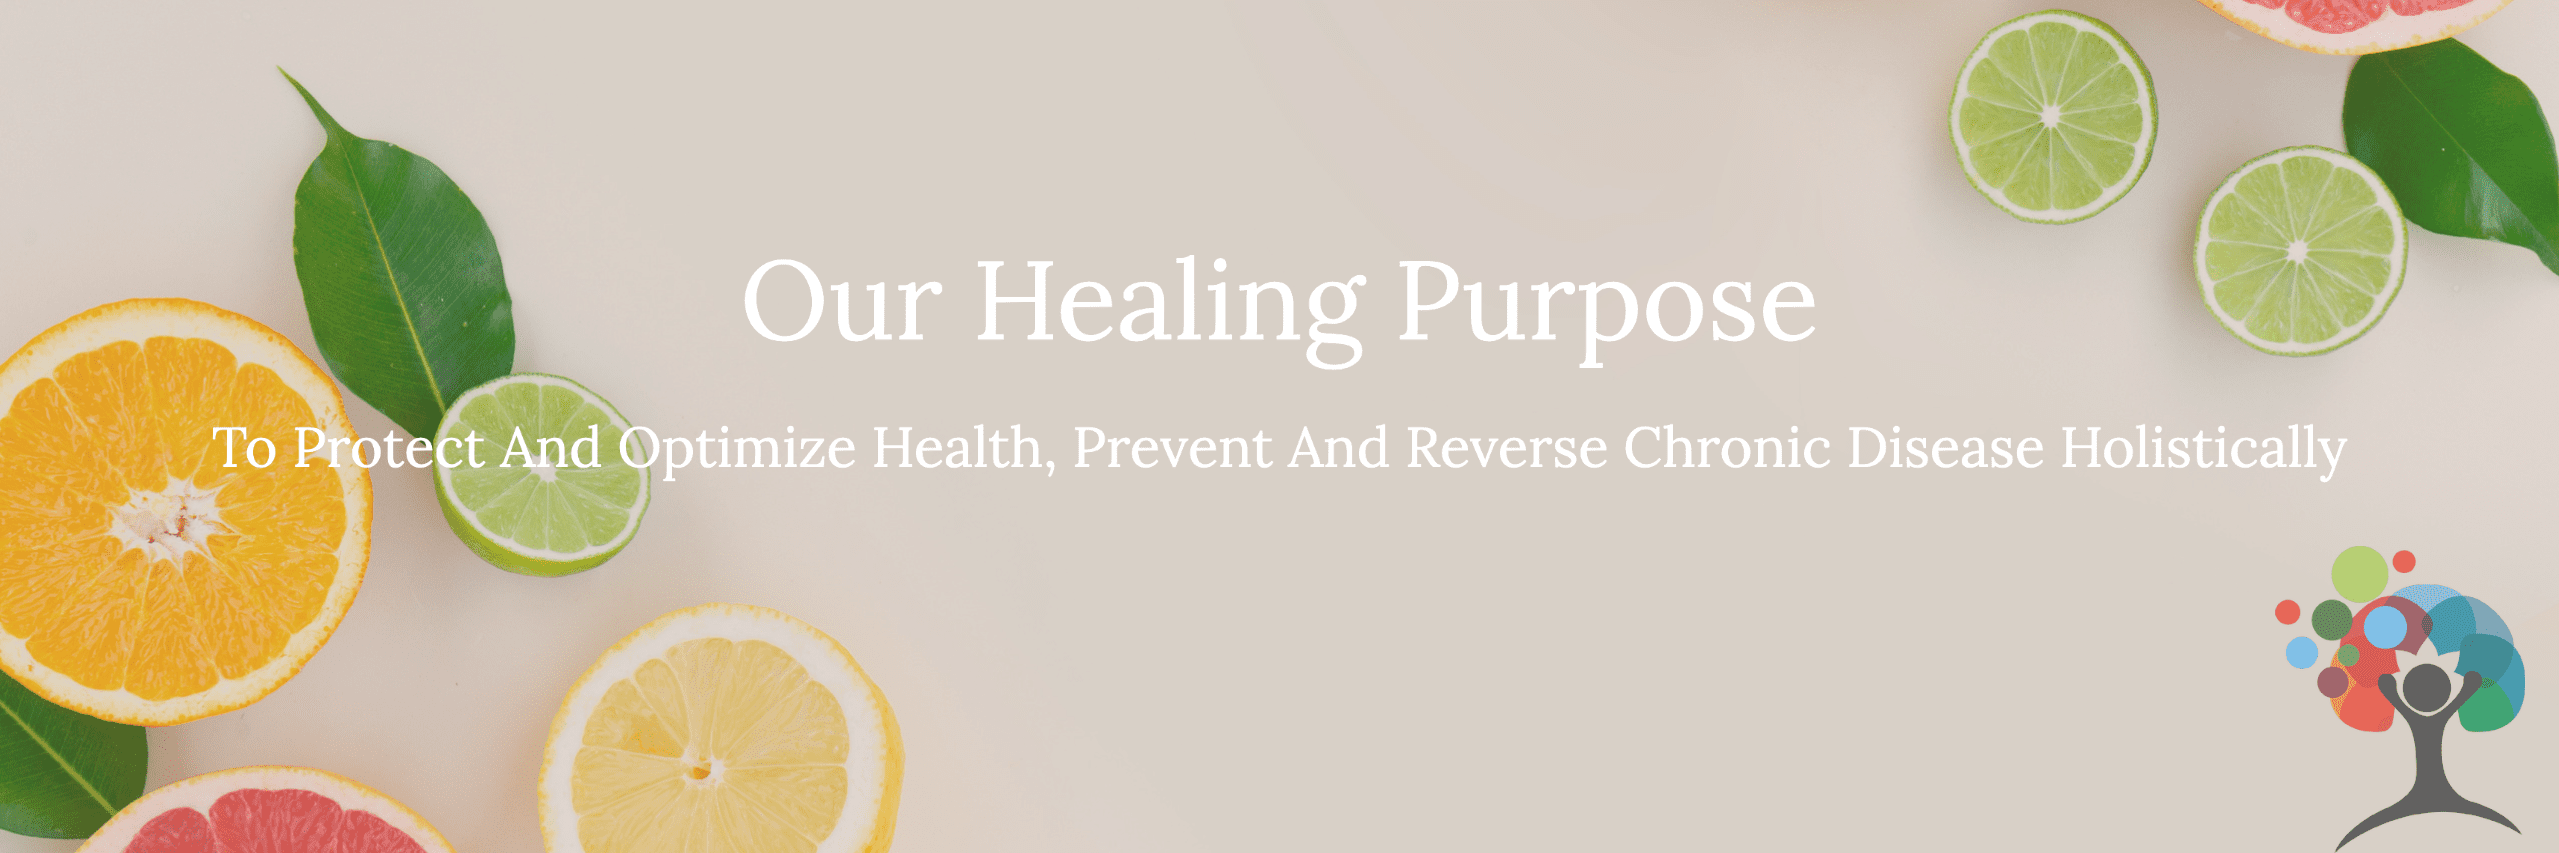 Healing Purpose